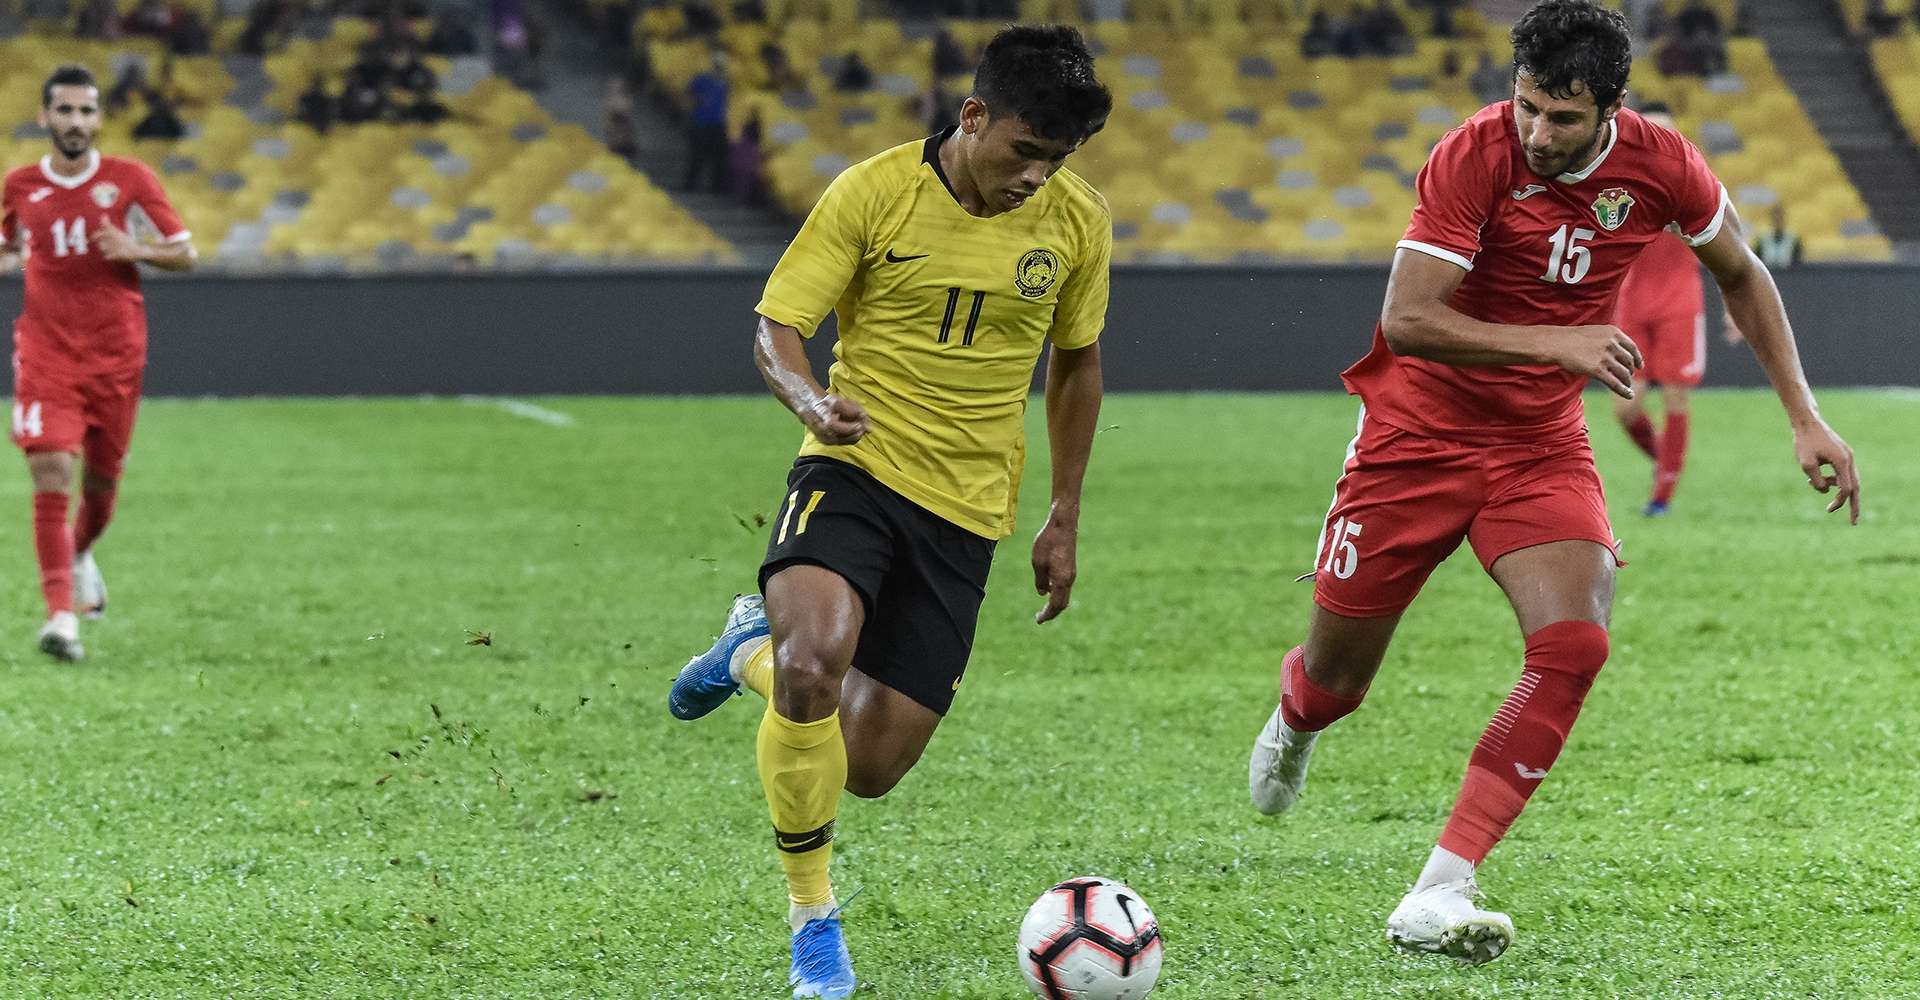 Safawi Rasid, Malaysia v Jordan, Friendly, 30 Aug 2019